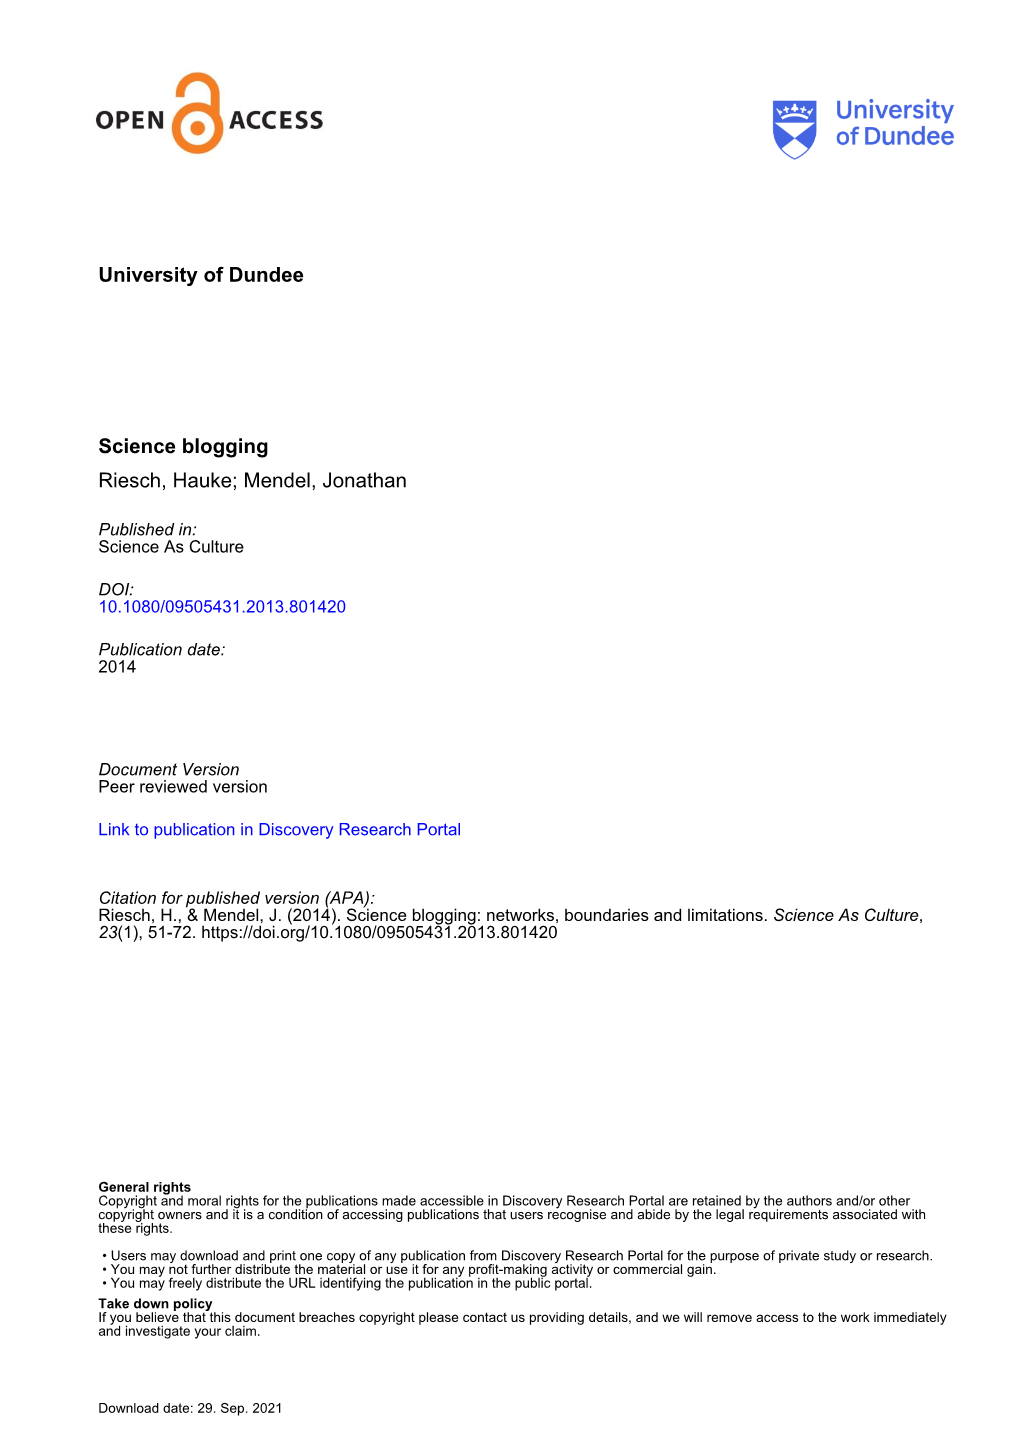 University of Dundee Science Blogging Riesch, Hauke; Mendel